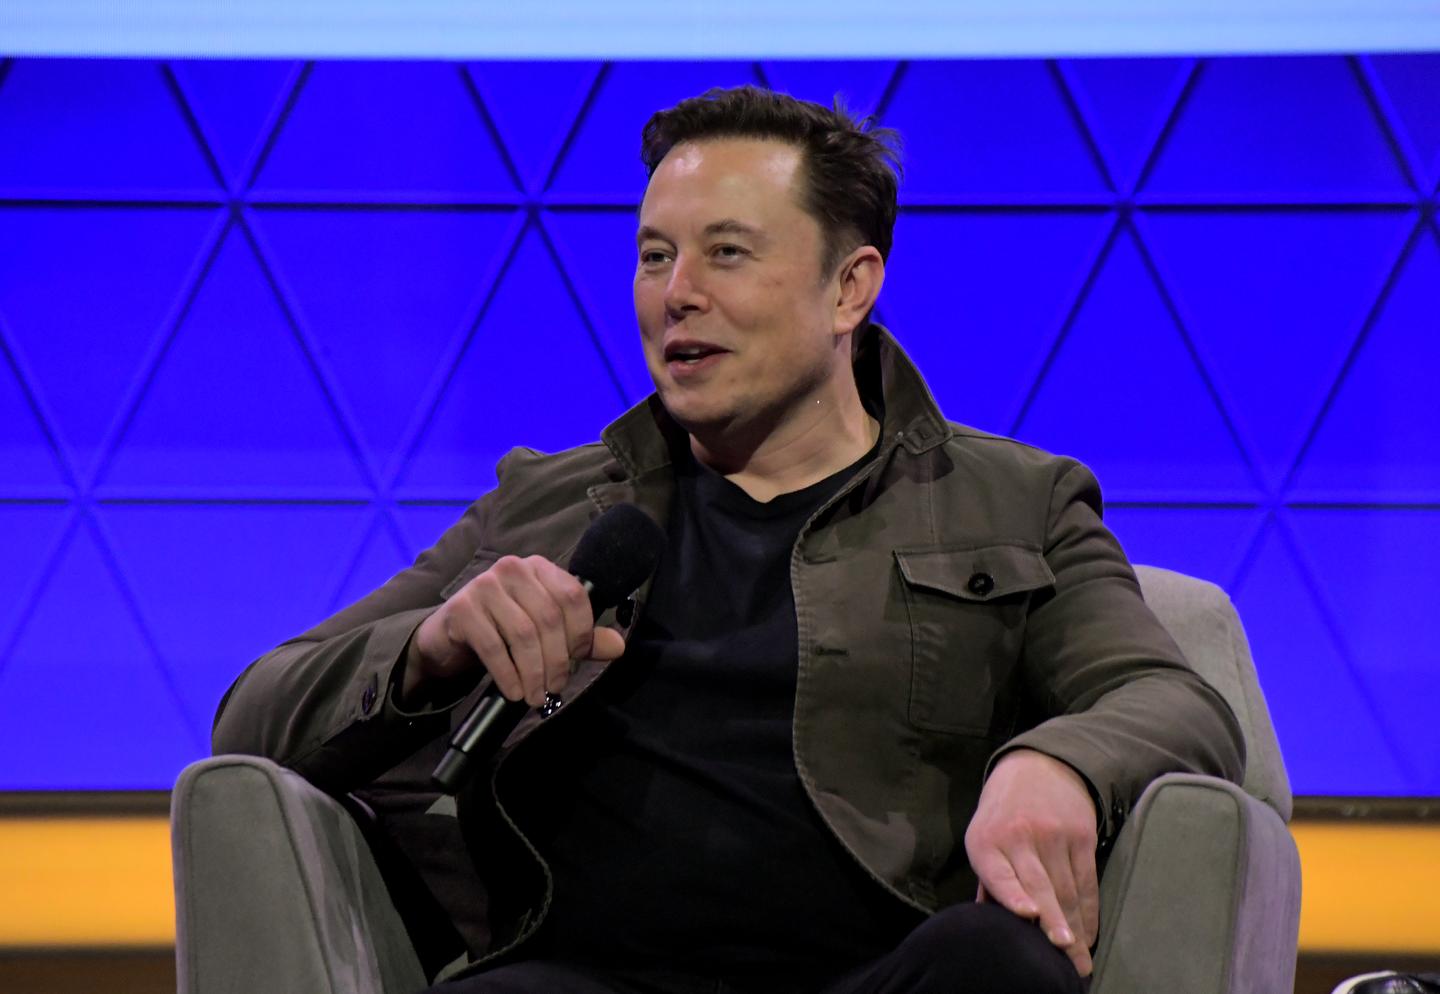 What Is Elon Musk's Net Worth?